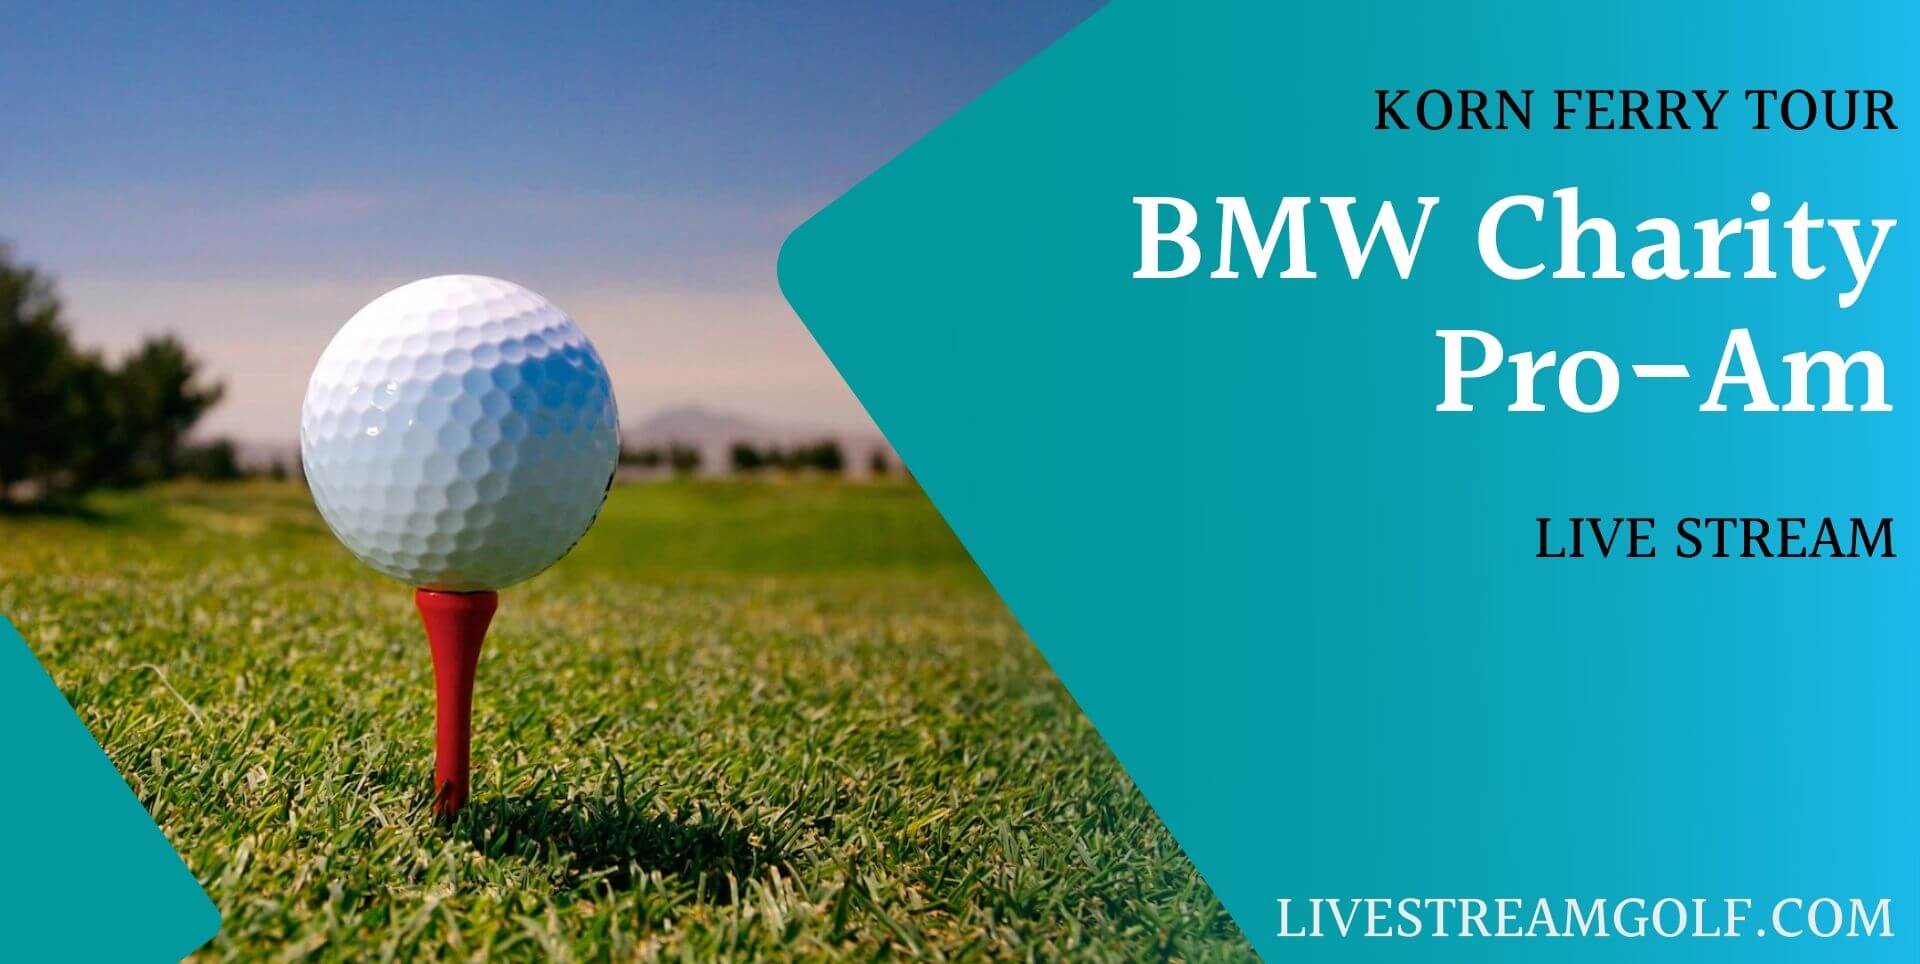 BMW Charity Pro-Am Day 3 Live Stream: Korn Ferry 2022